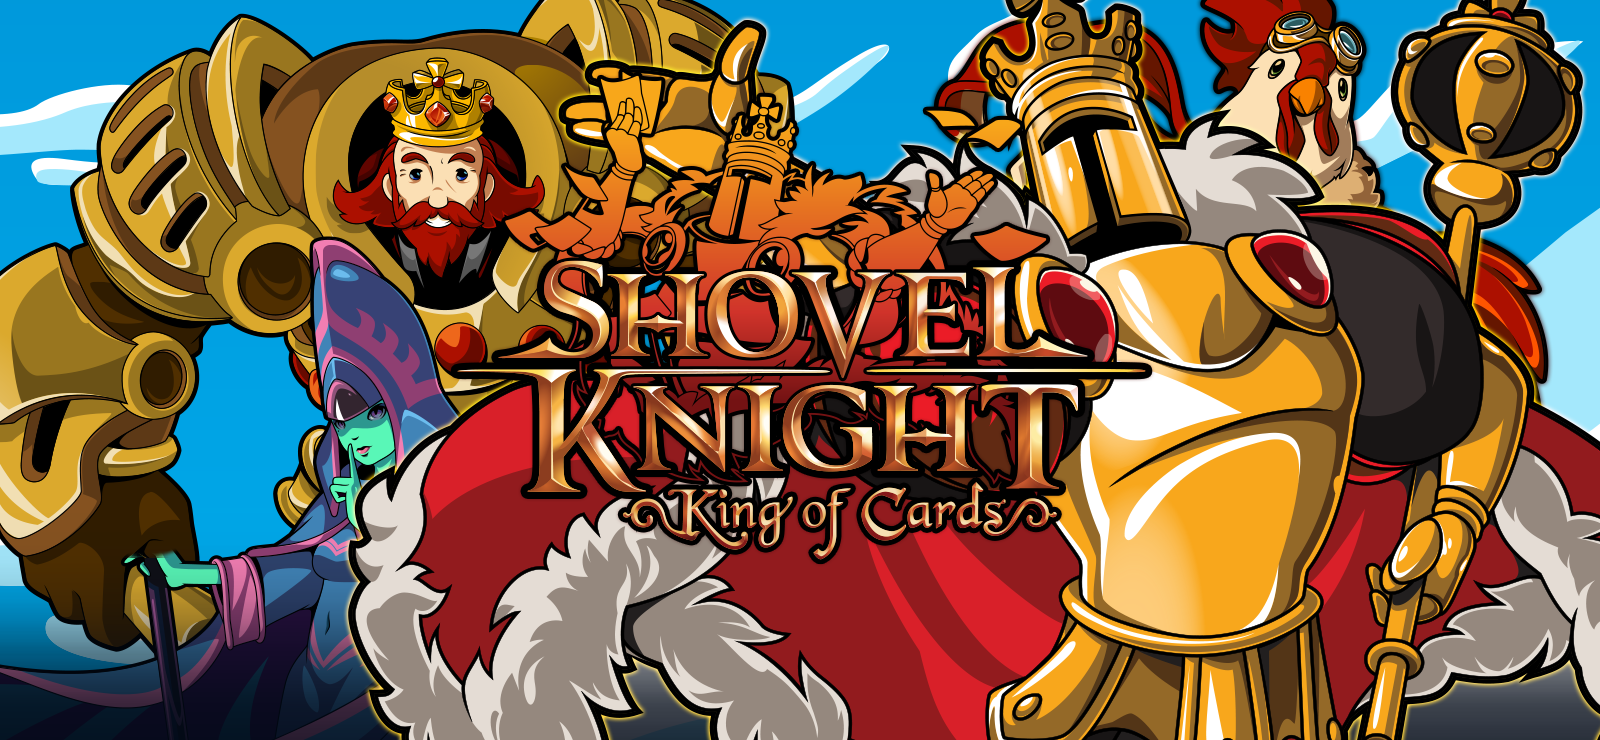 Shovel Knight: King Of Cards